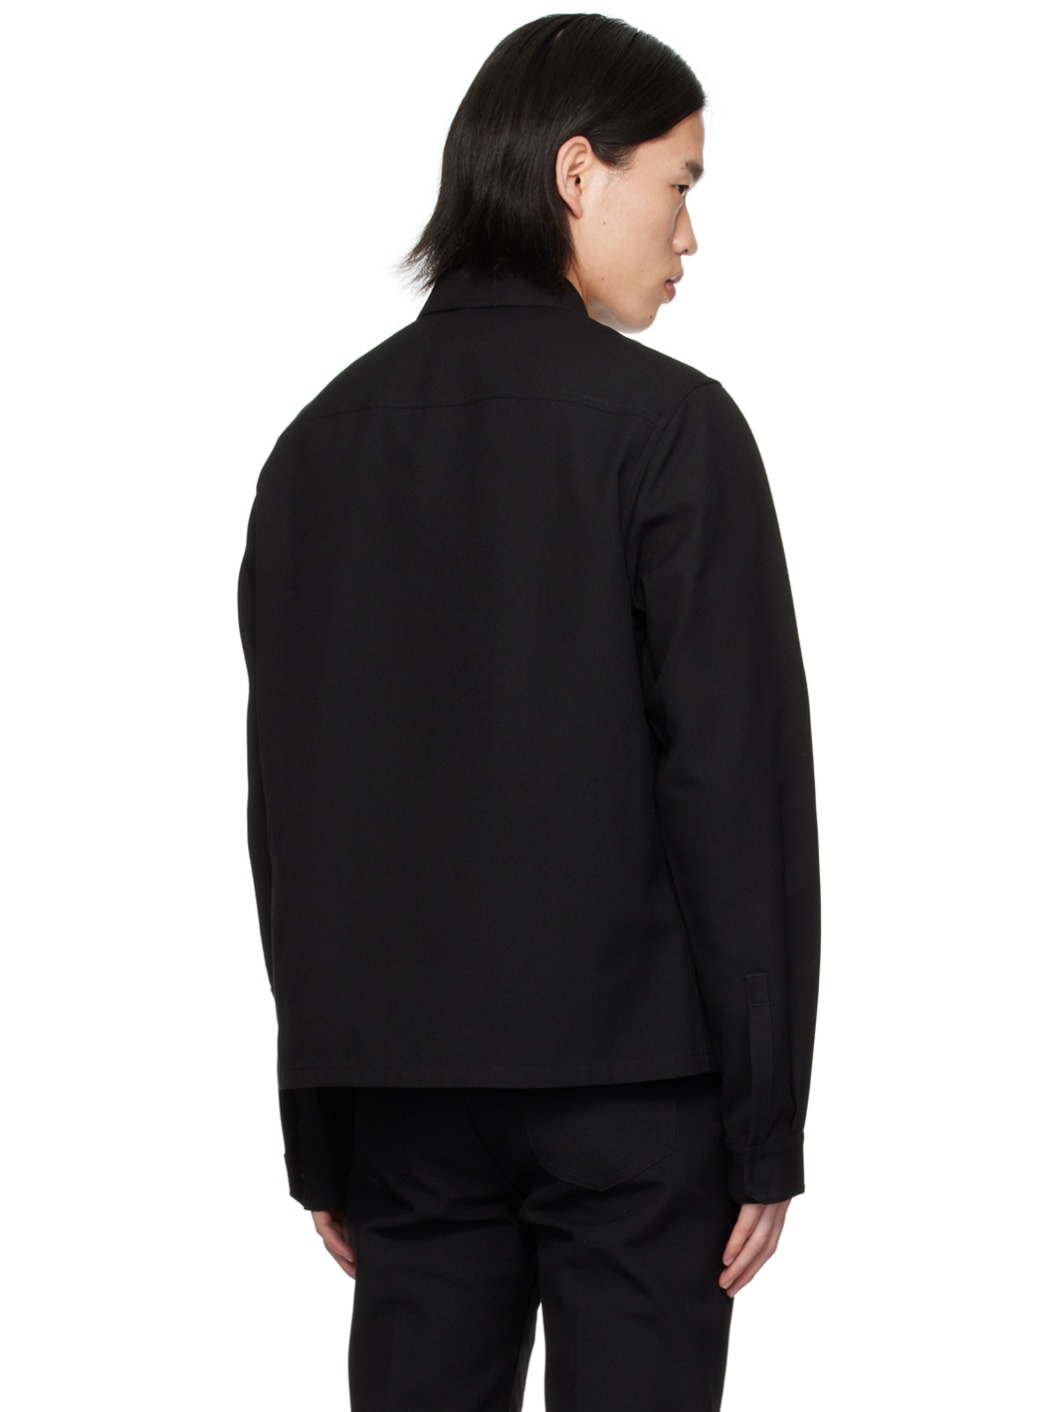 Black Cropped Shirt - 3